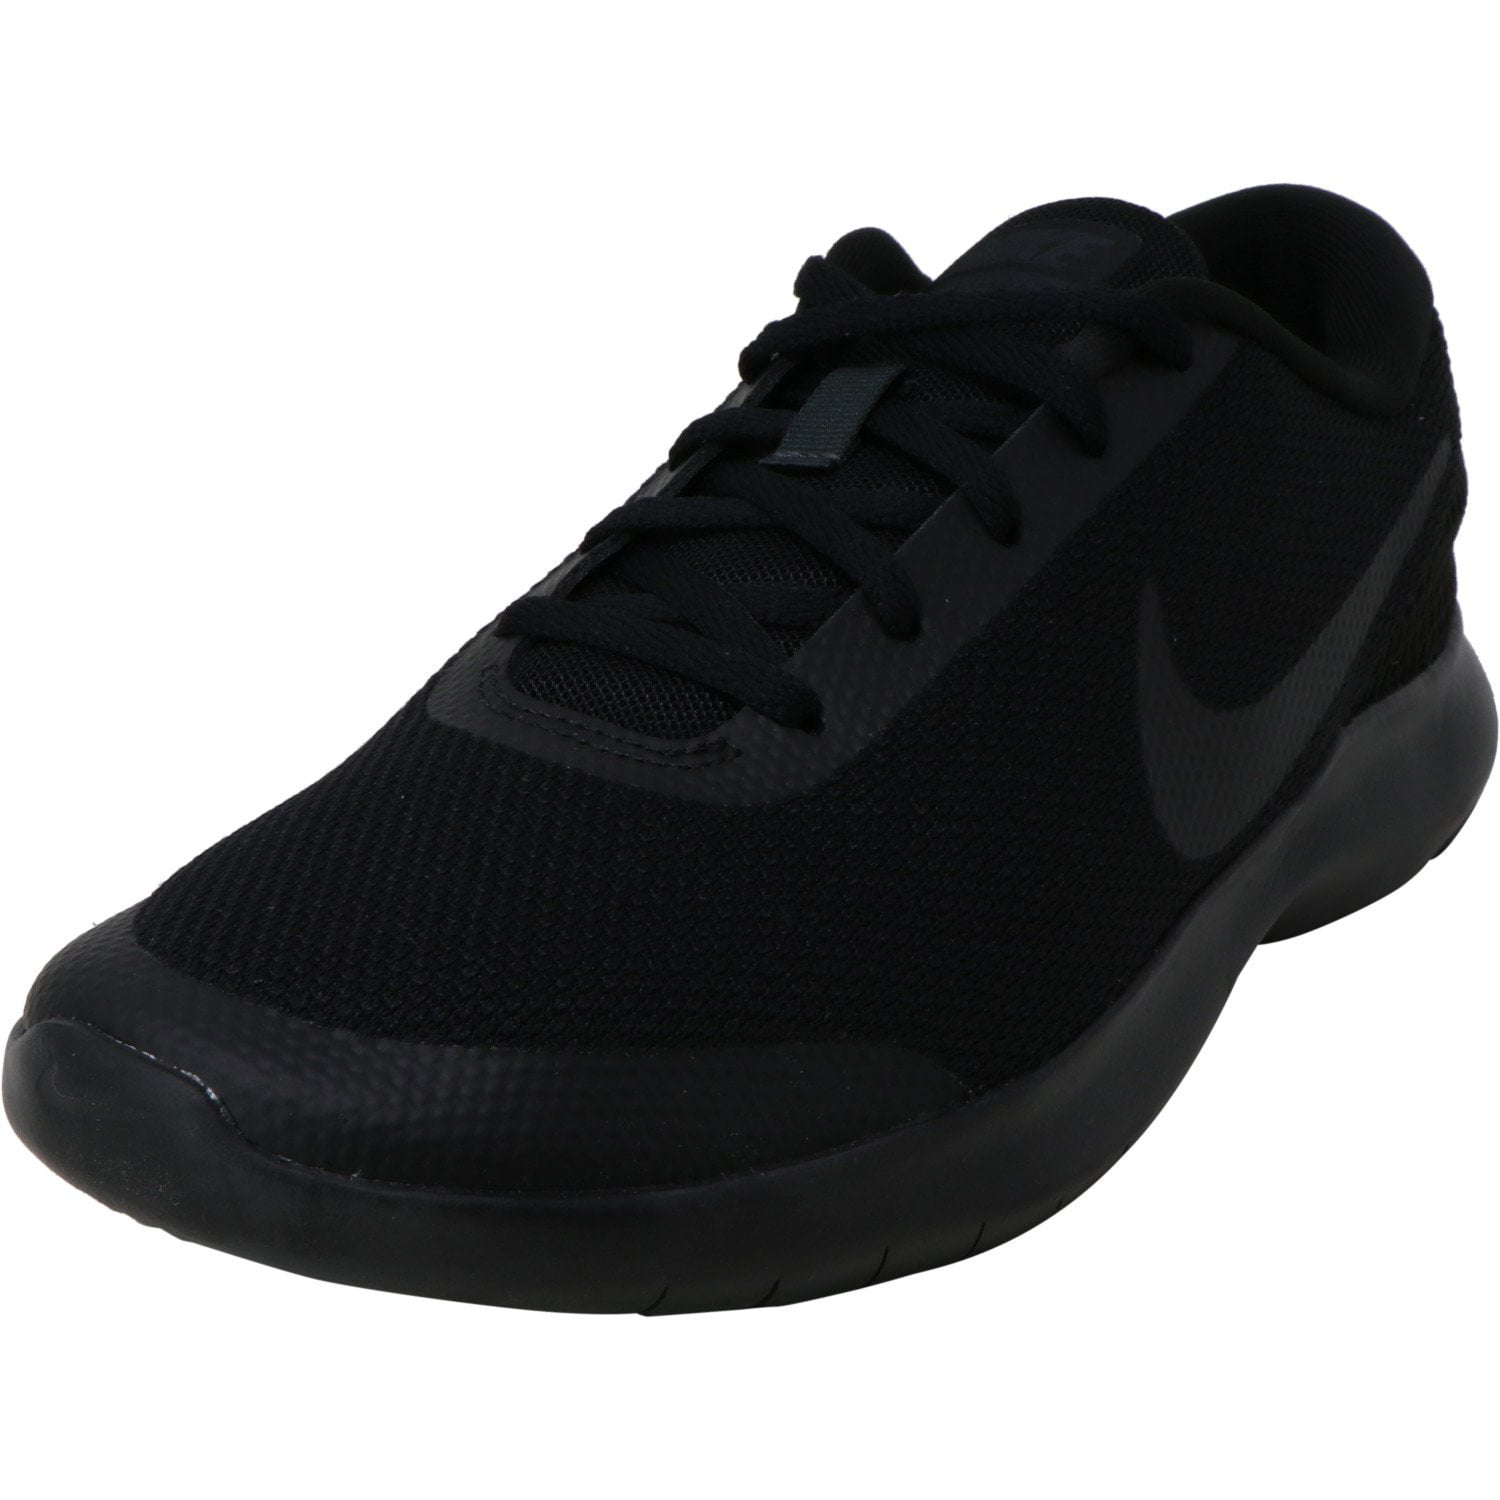 Nike Nike Womens Flex Experience Rn 7 Black Black Anthracite Ankle